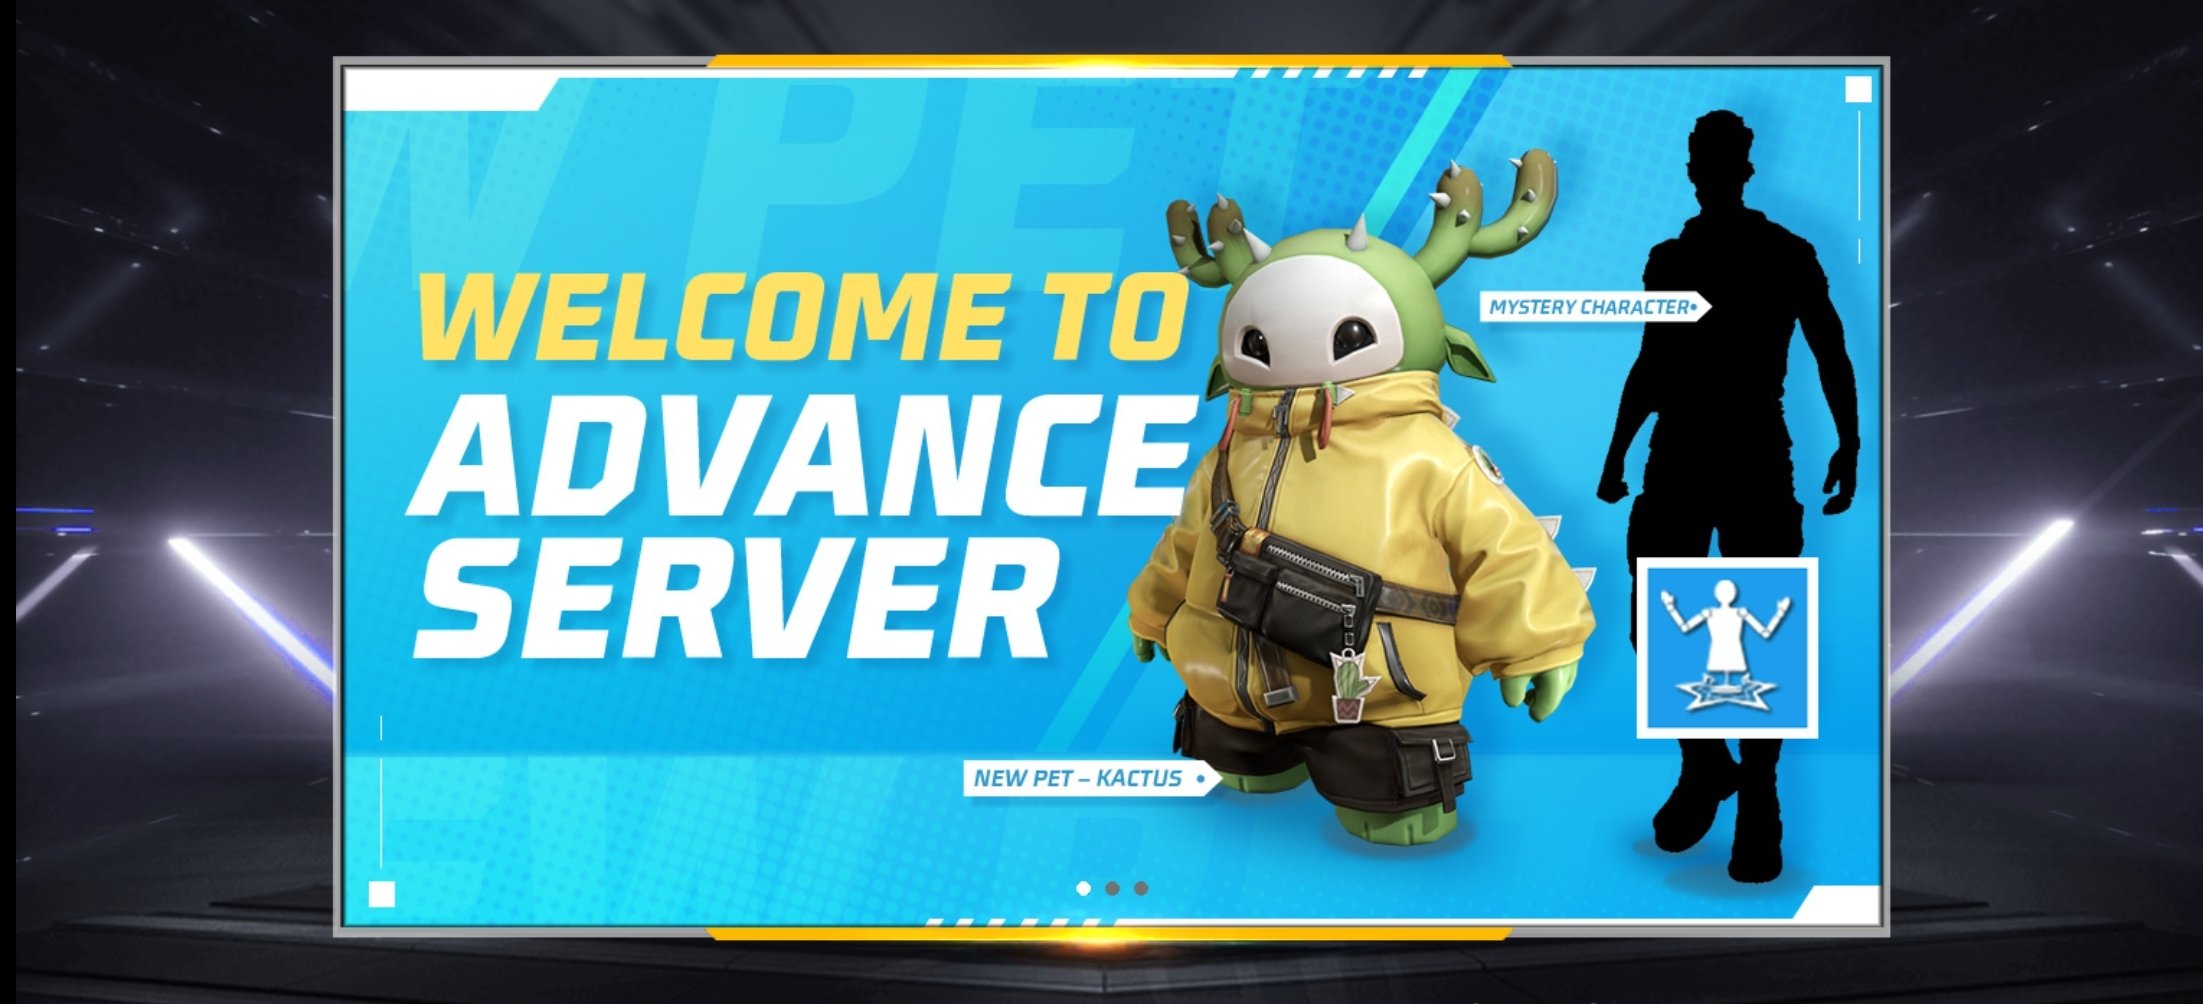 Advance server